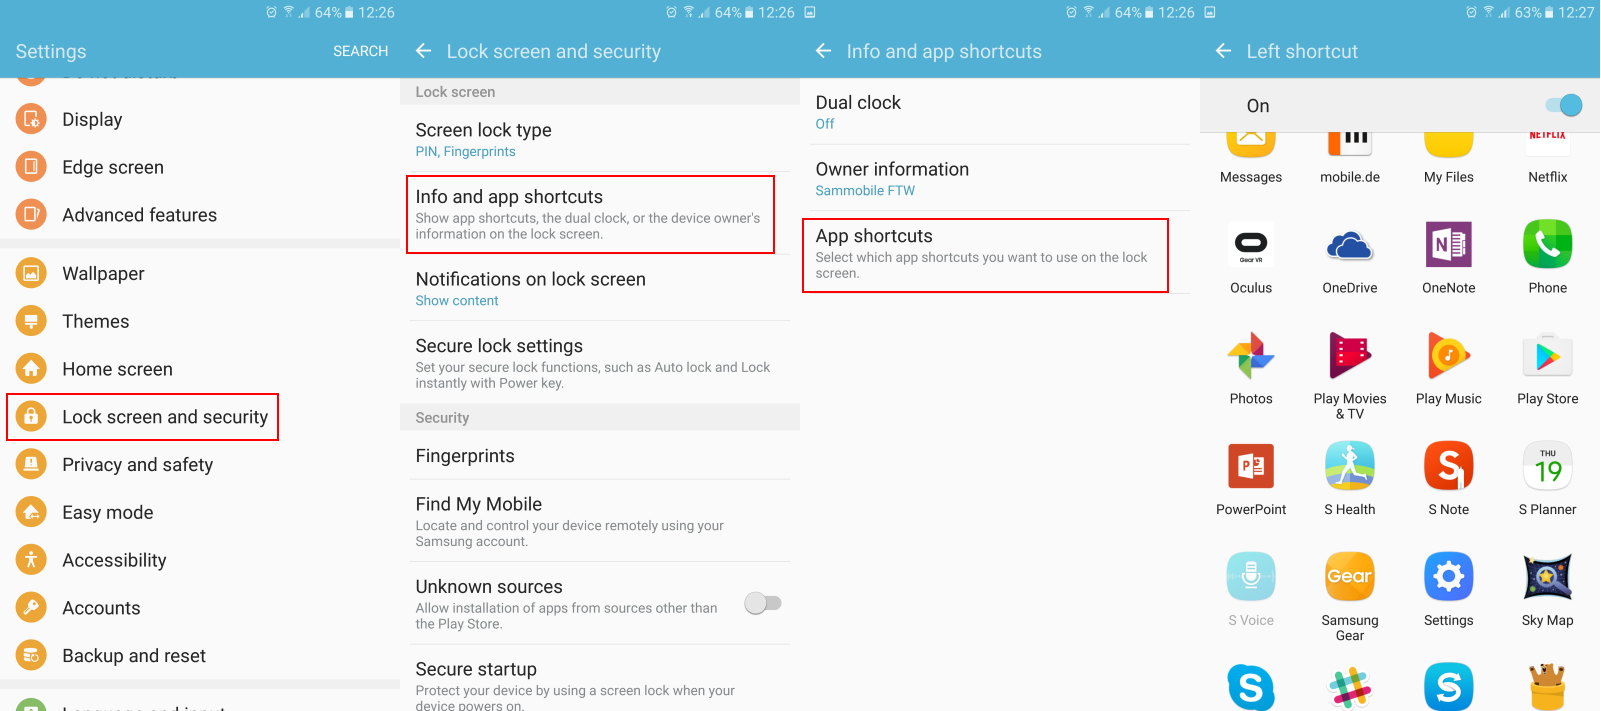 Samsung Galaxy S7 & S7 edge tutorial: how to customize lock screen shortcuts